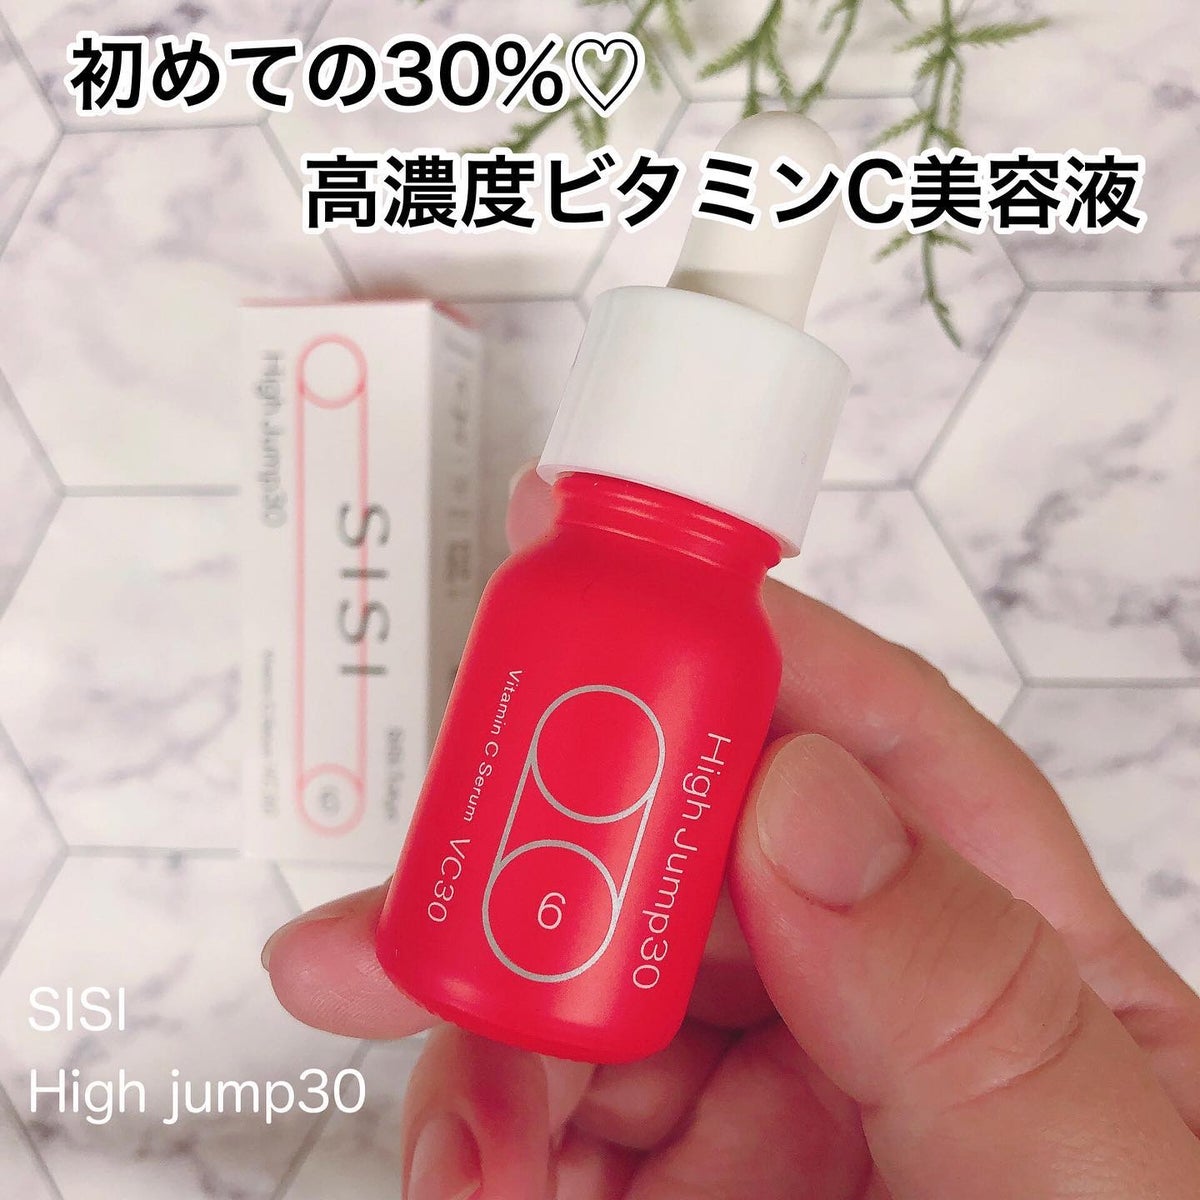 SISI High Jump30 - 美容液